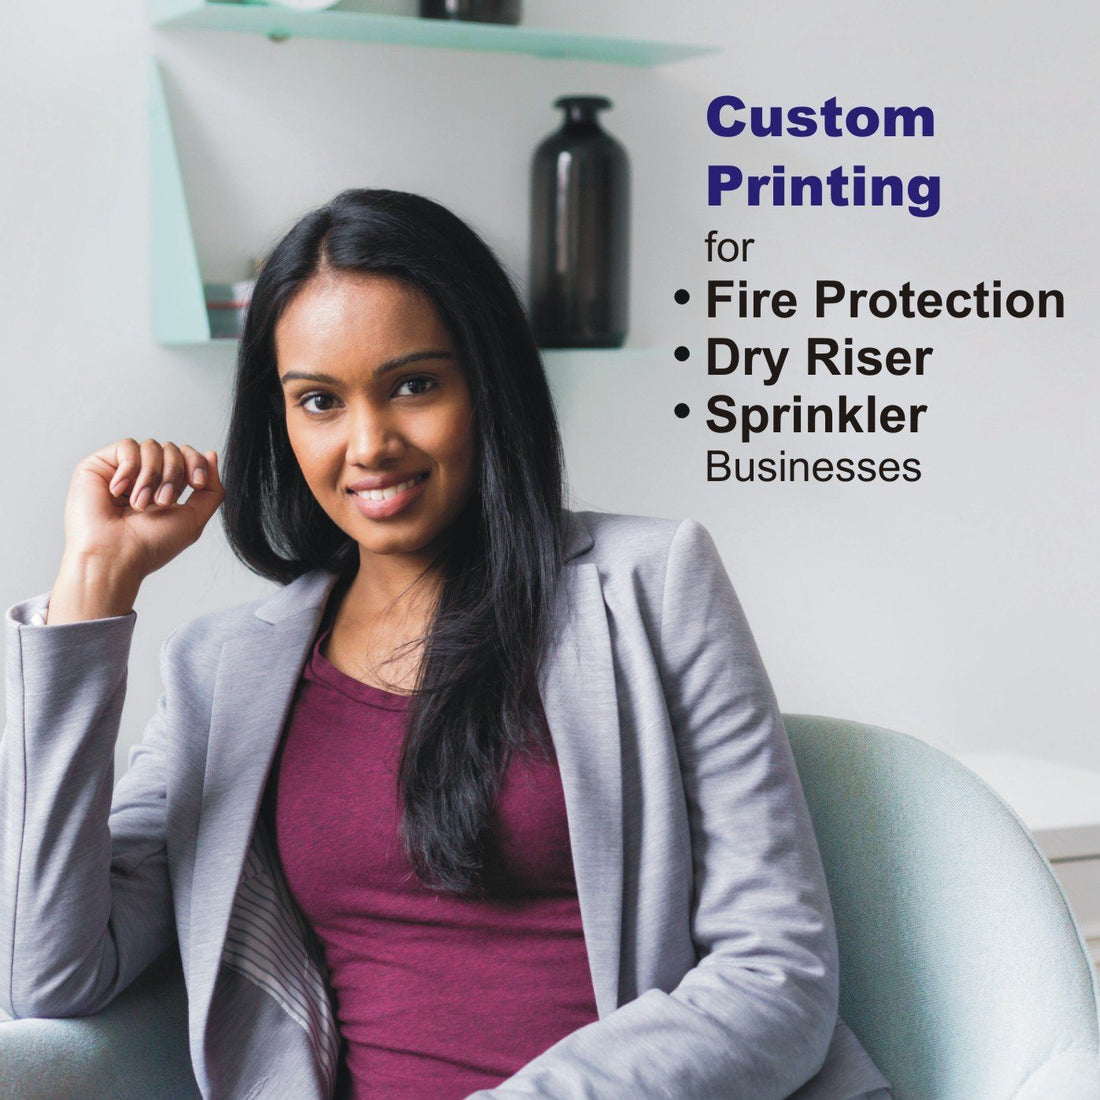 Printing for Fire Protection, Dry Riser & Sprinkler Businesses